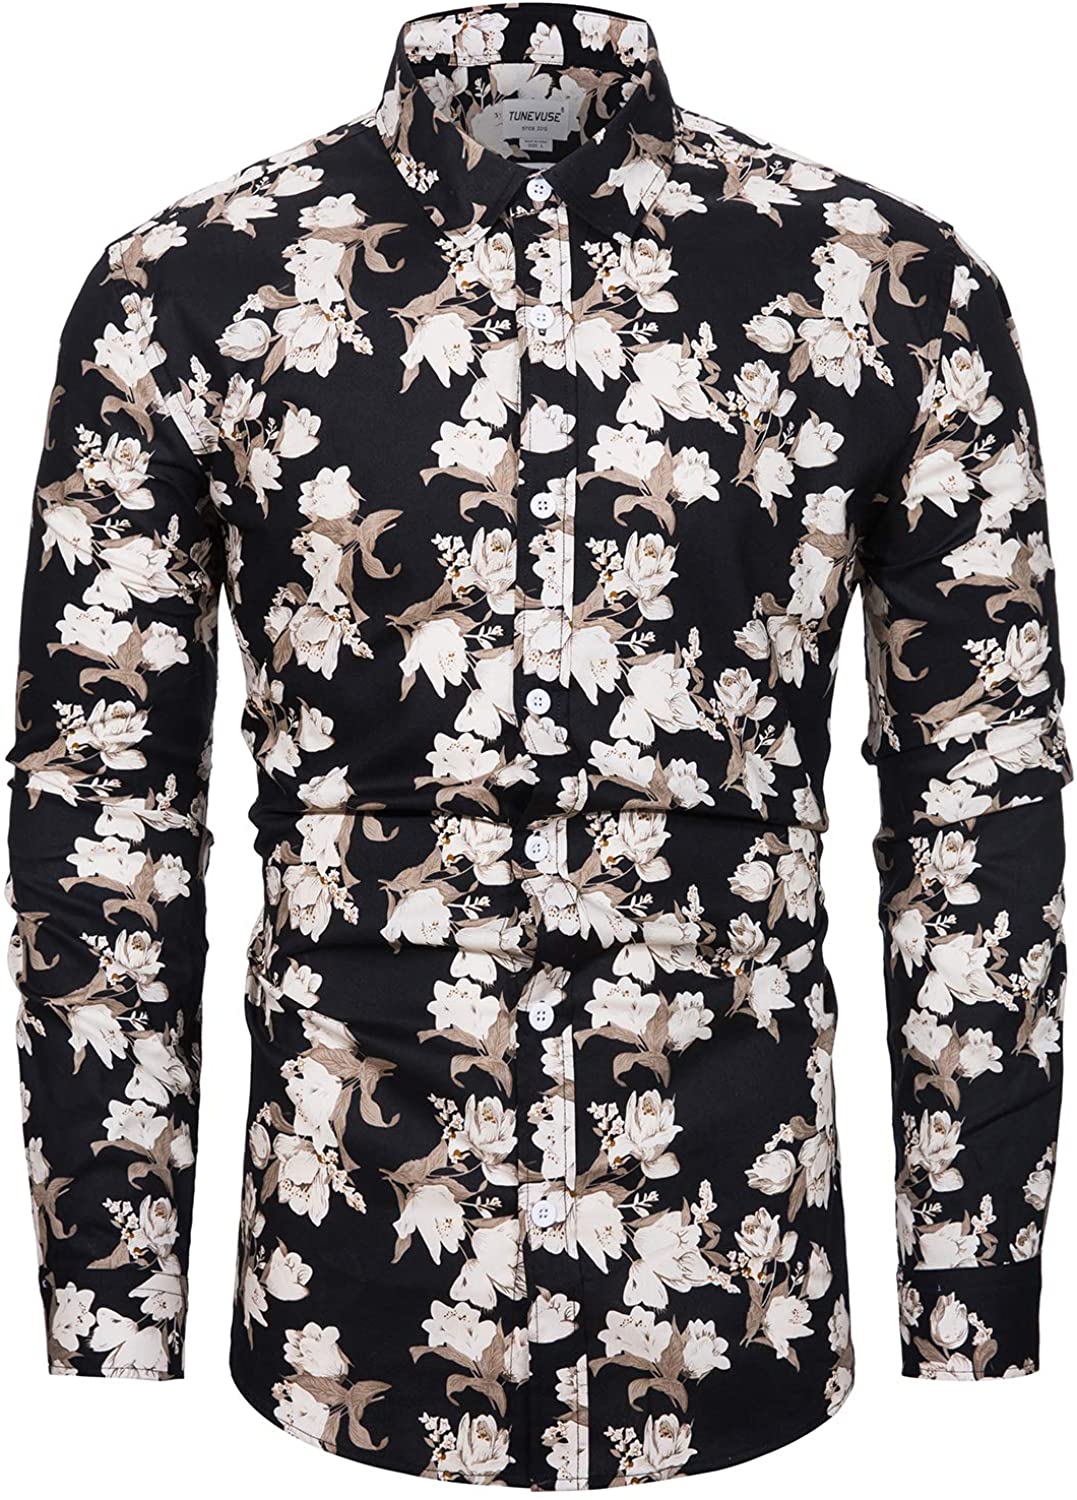 fohemr Mens Floral Shirt Casual Button Down Long Sleeve Flower Printed Shirt 100% Cotton